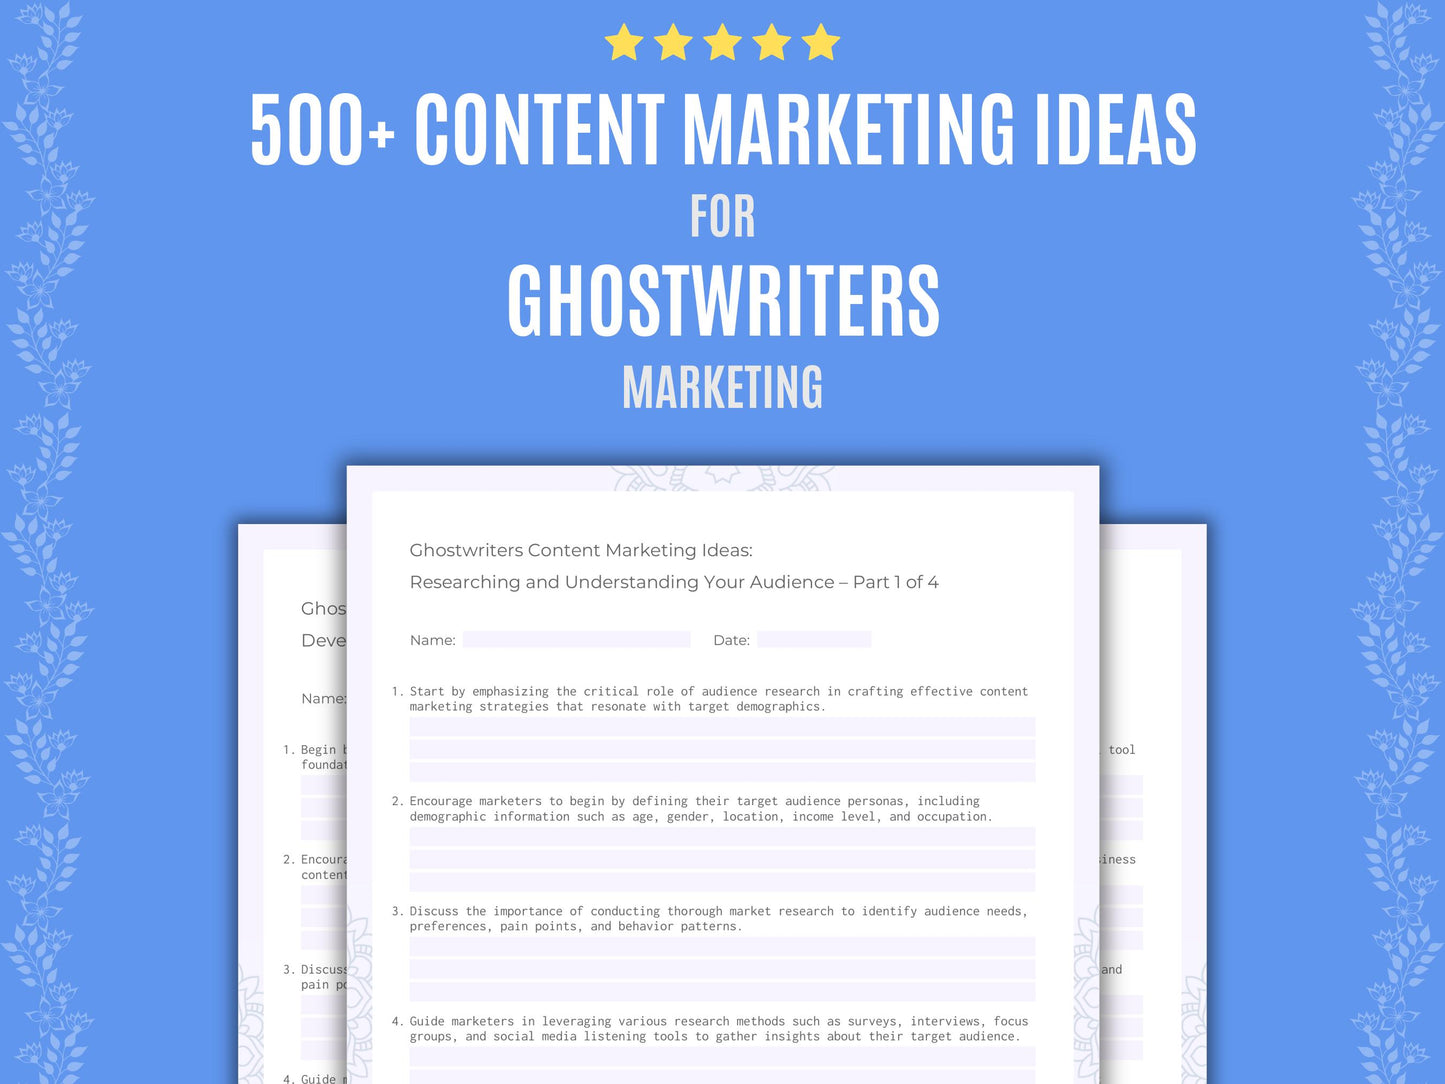 Ghostwriters Content Marketing Ideas Resource